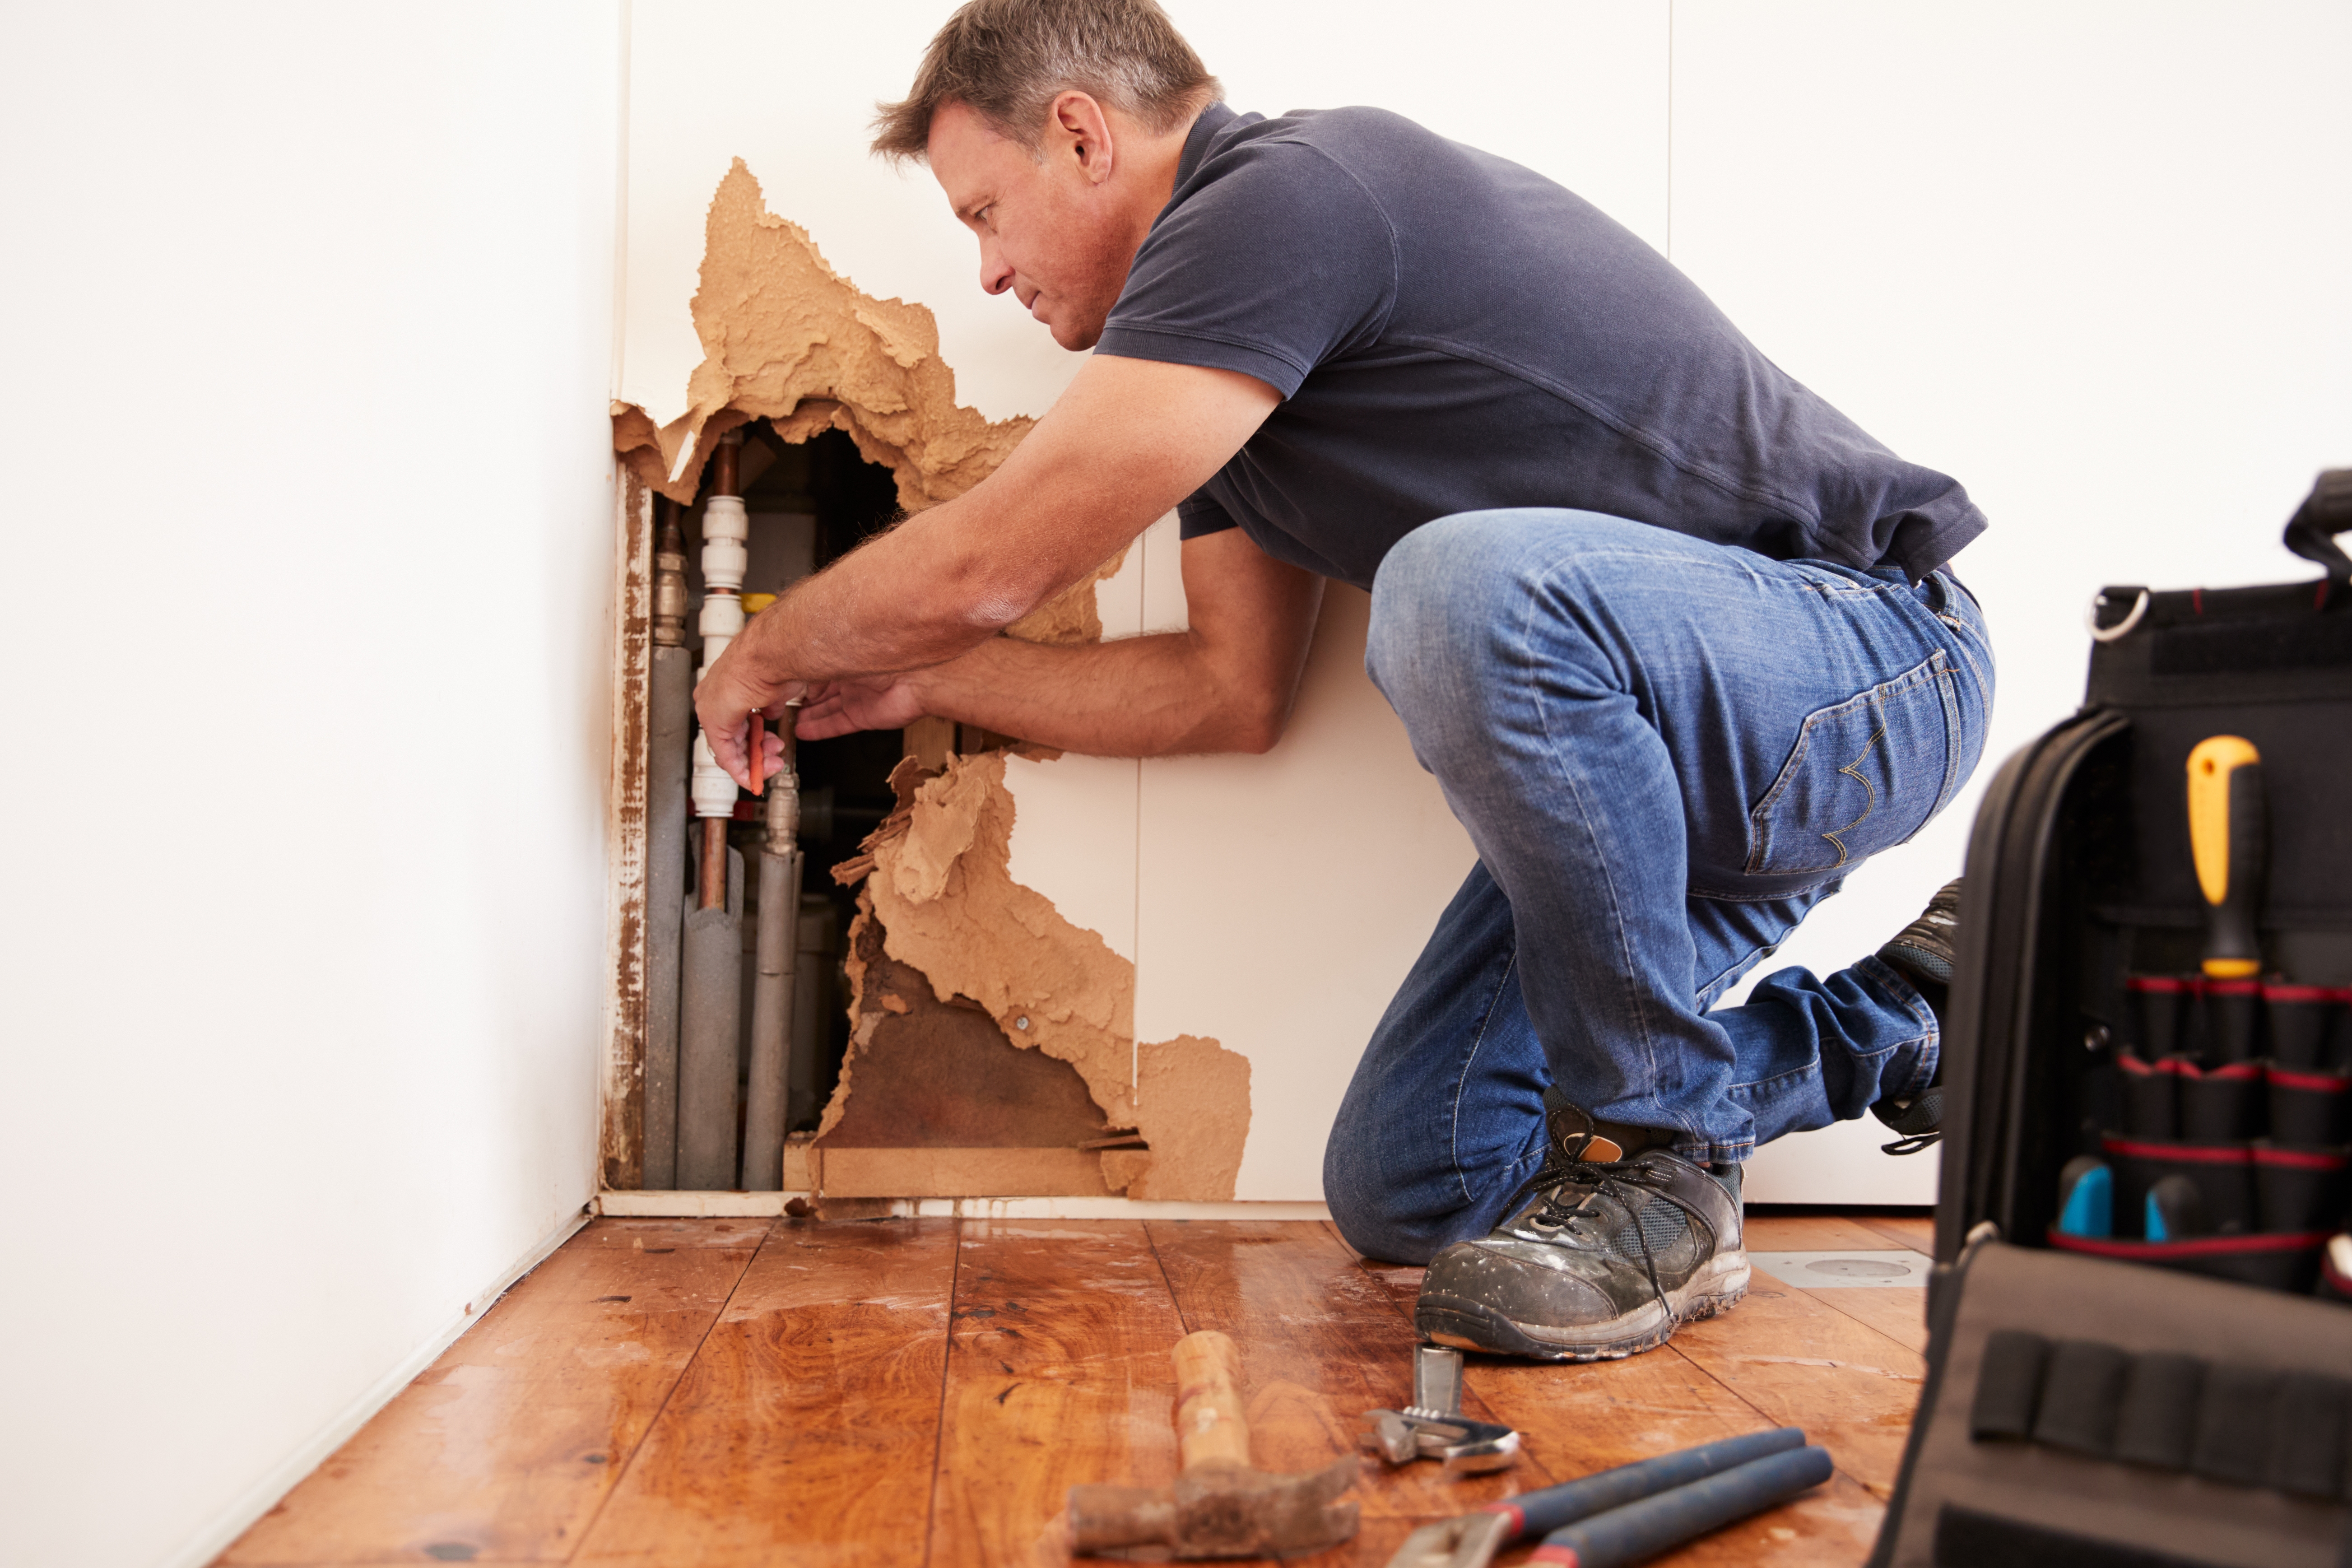 A plumber fixes broken pipes inside a wall